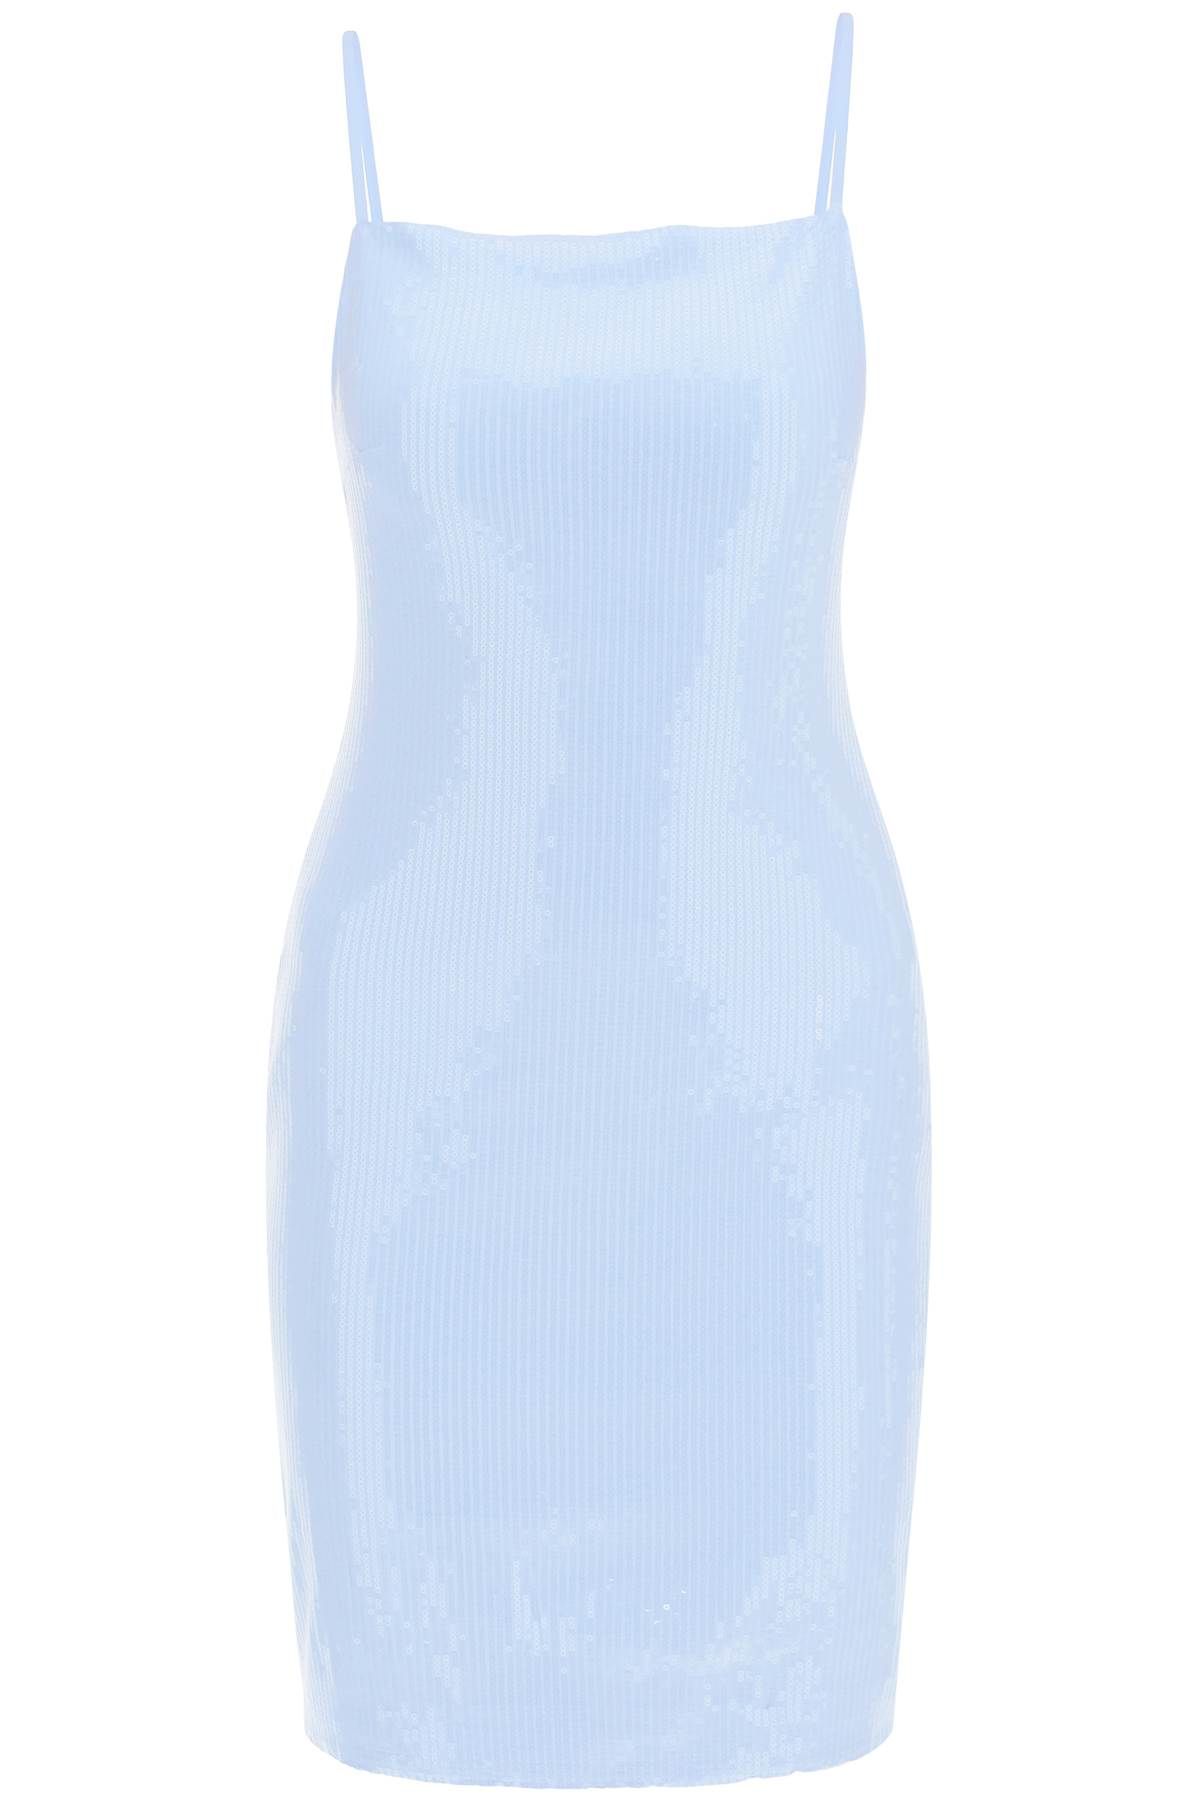 Shop Rotate Birger Christensen Sequined Slip Dress With In Light Blue